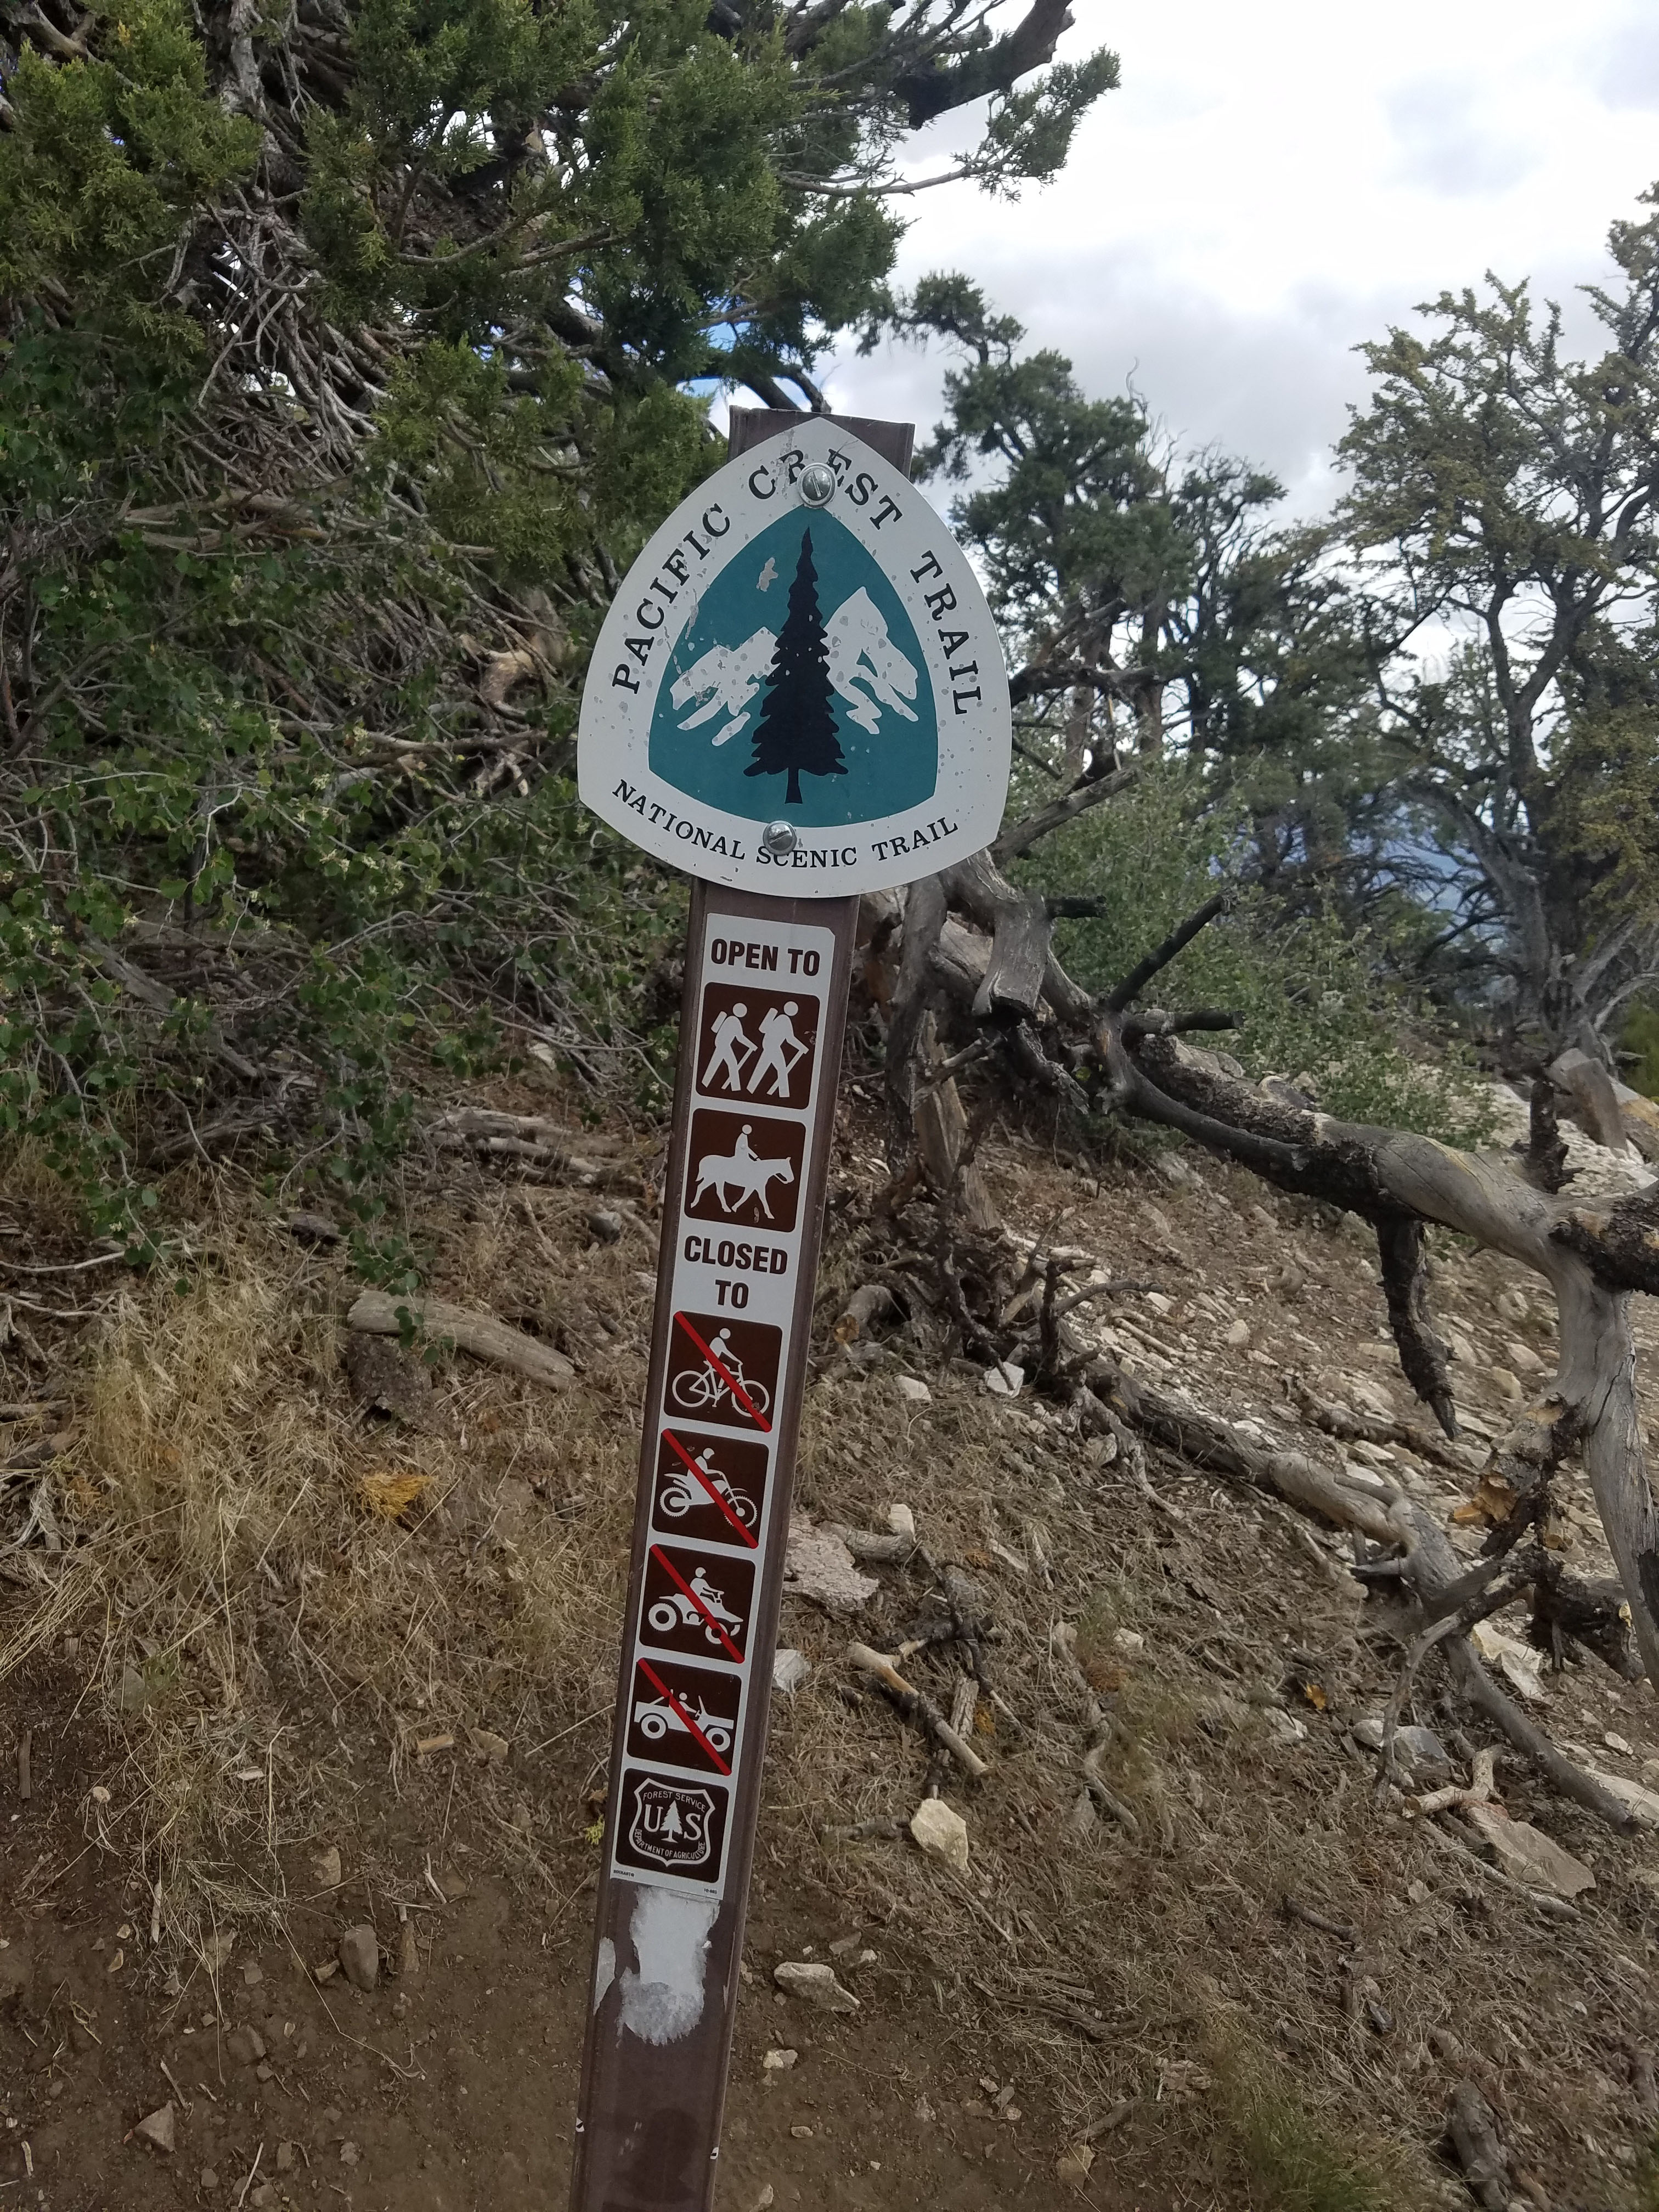 Cougar Crest Trail